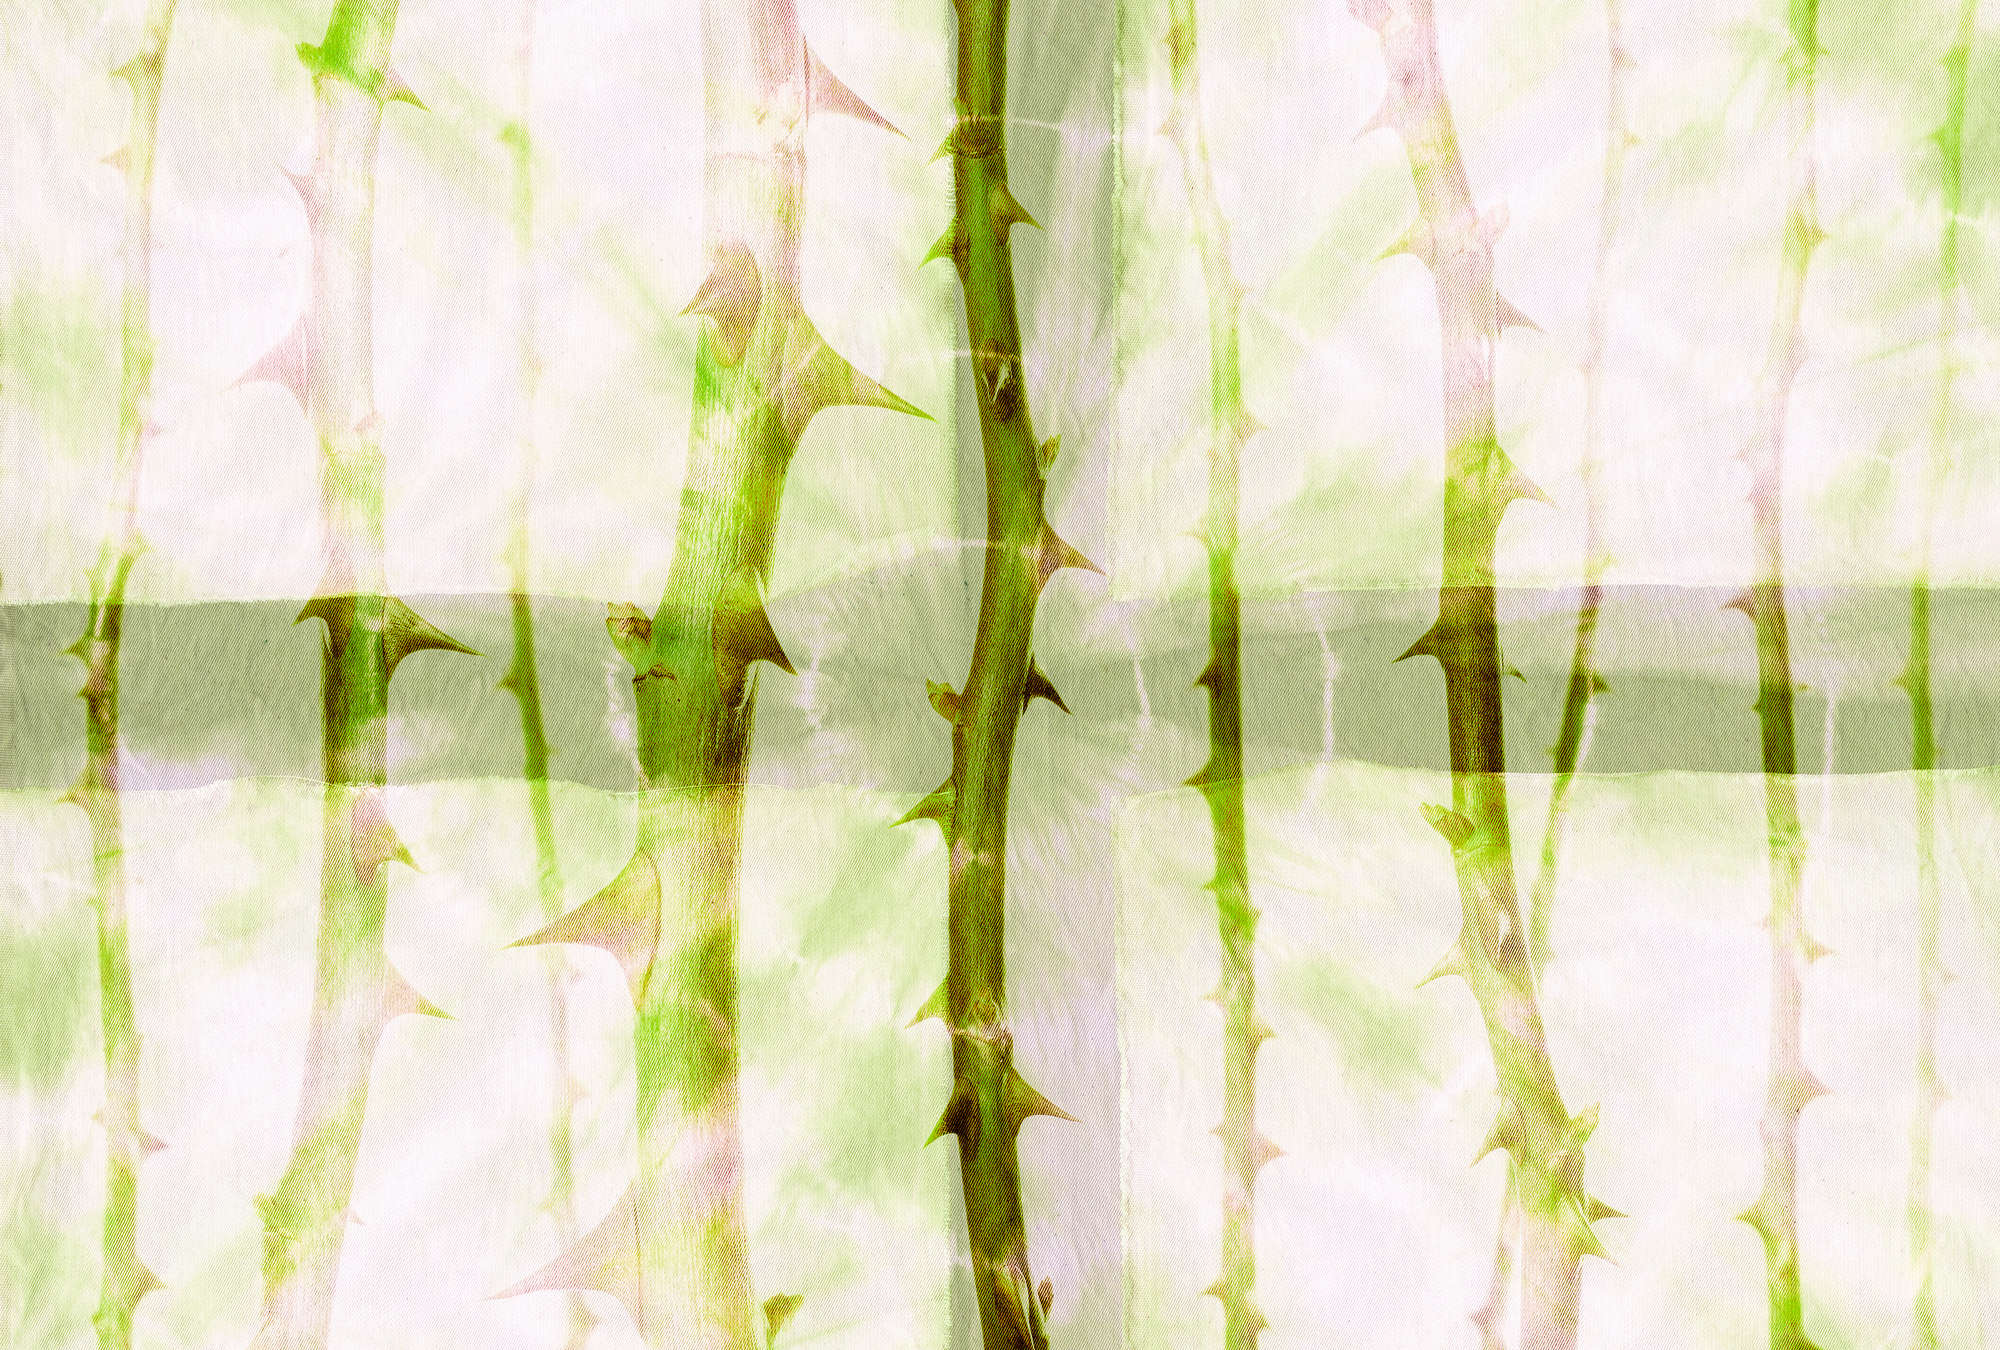             Pastel mural thorns pattern - green, white, grey
        